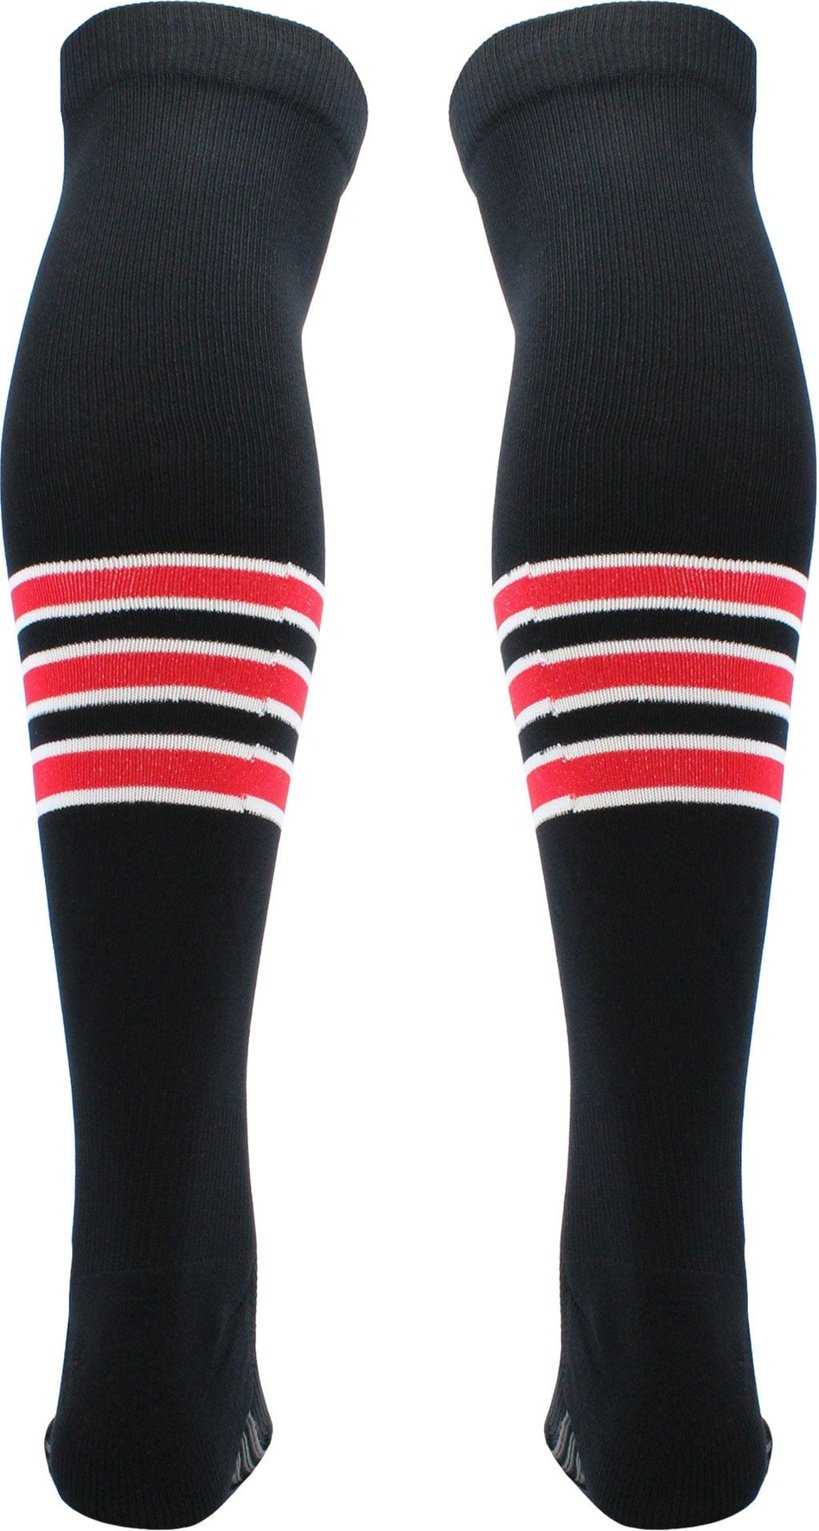 TCK Dugout Striped Over the Knee Baseball Socks - Black White Scarlet - HIT a Double